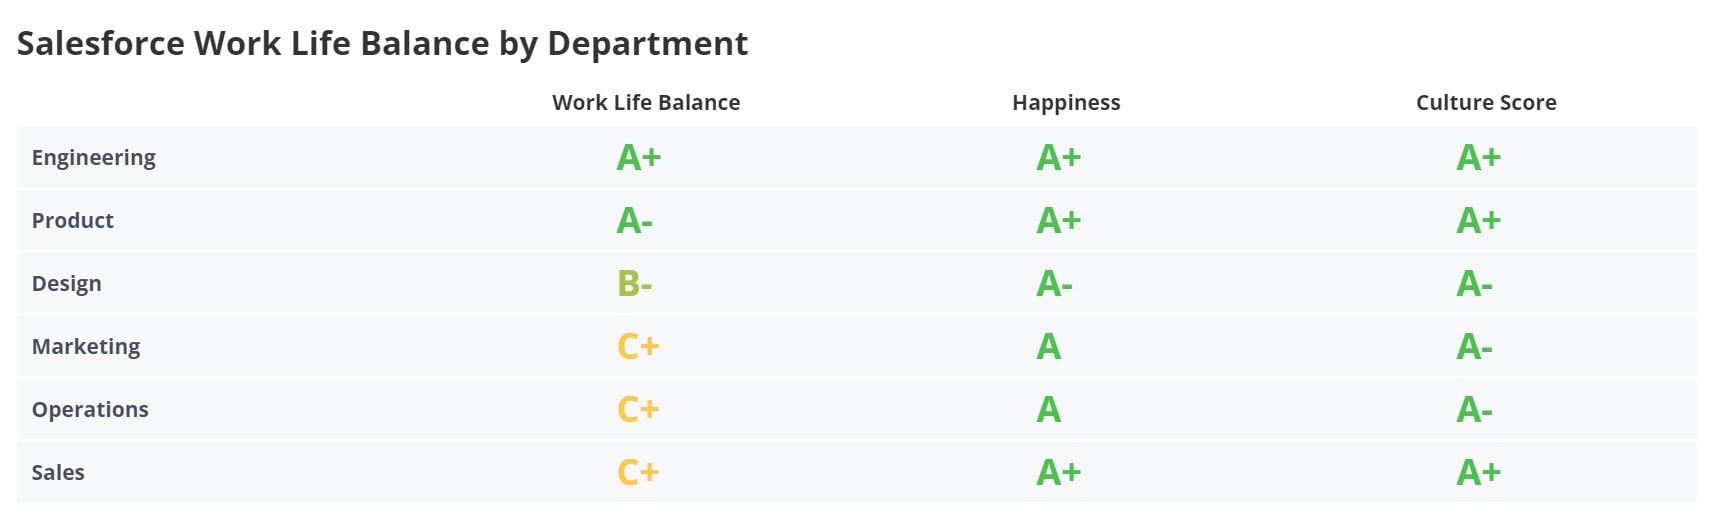 Salesforce Work Life Balance by Department